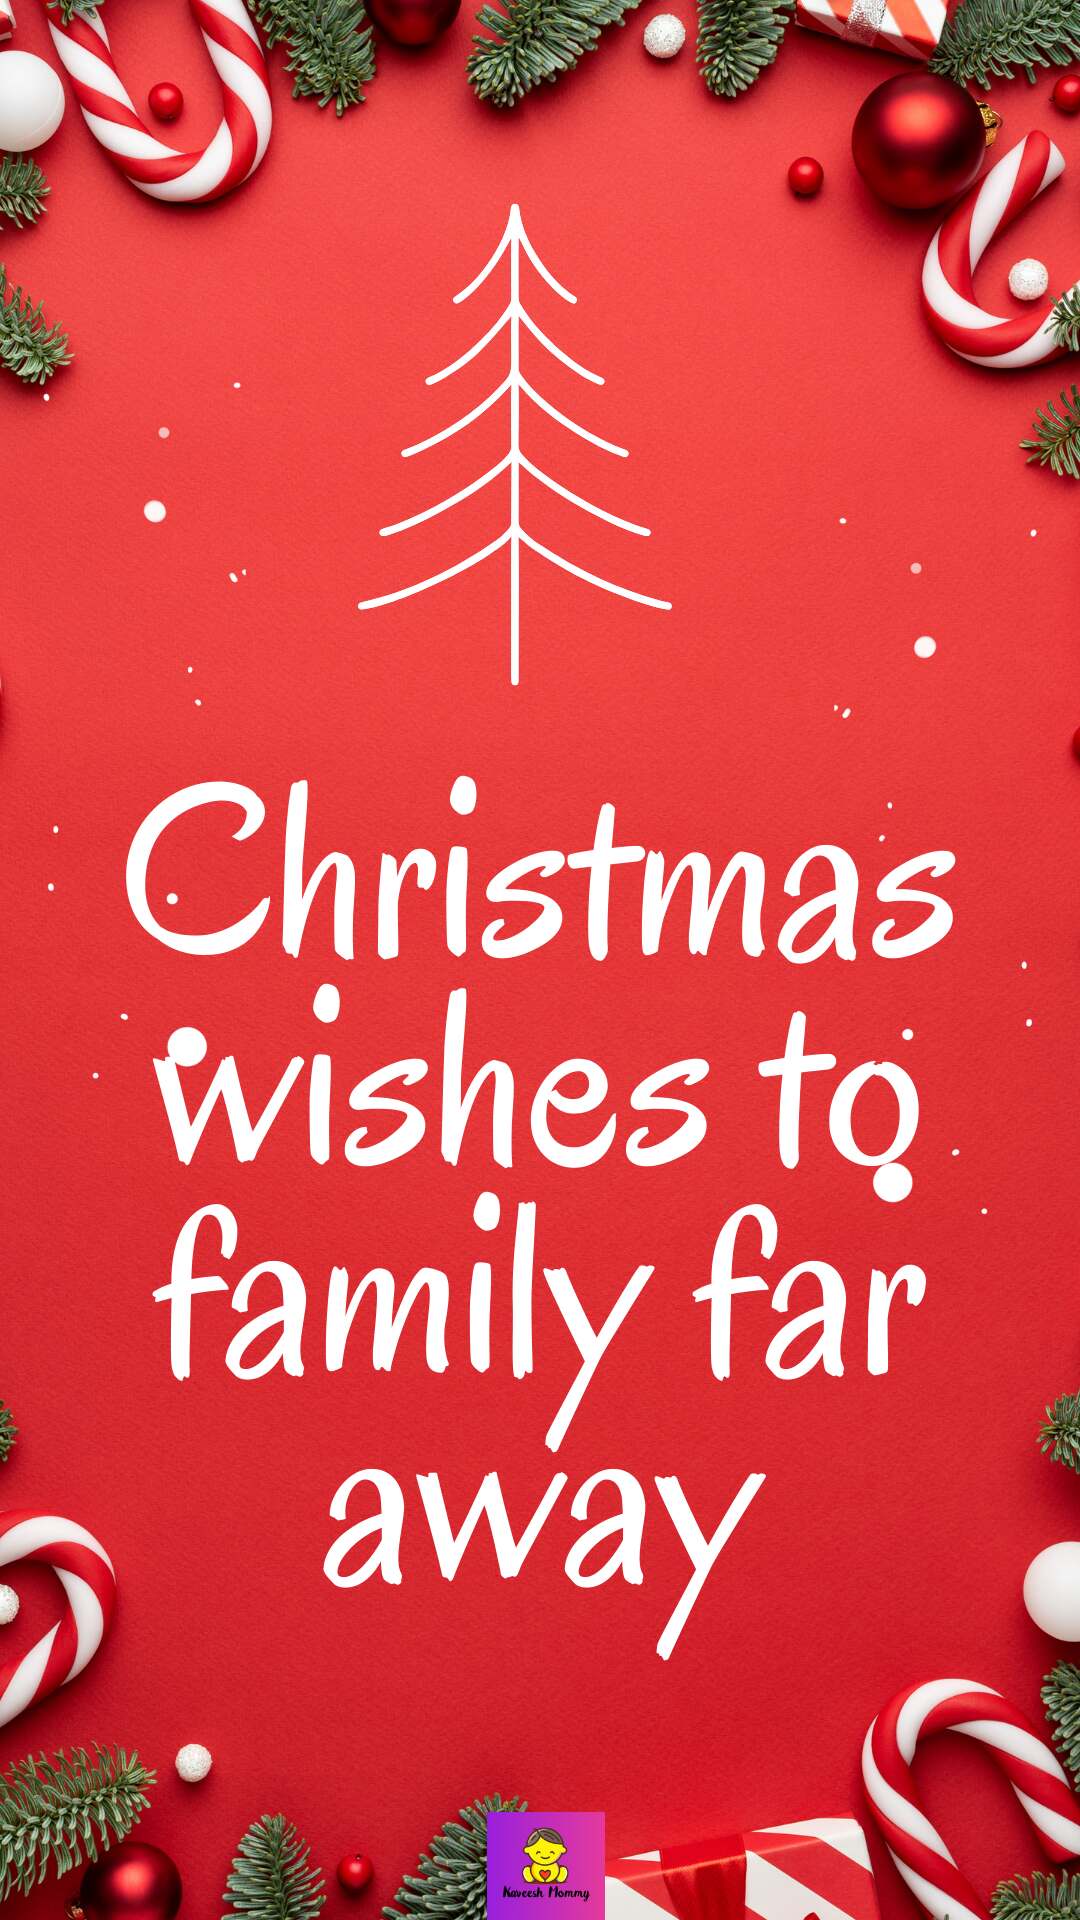 40 Heartfelt Christmas Wishes for Family Far Away - The Thrifty Mom's ...